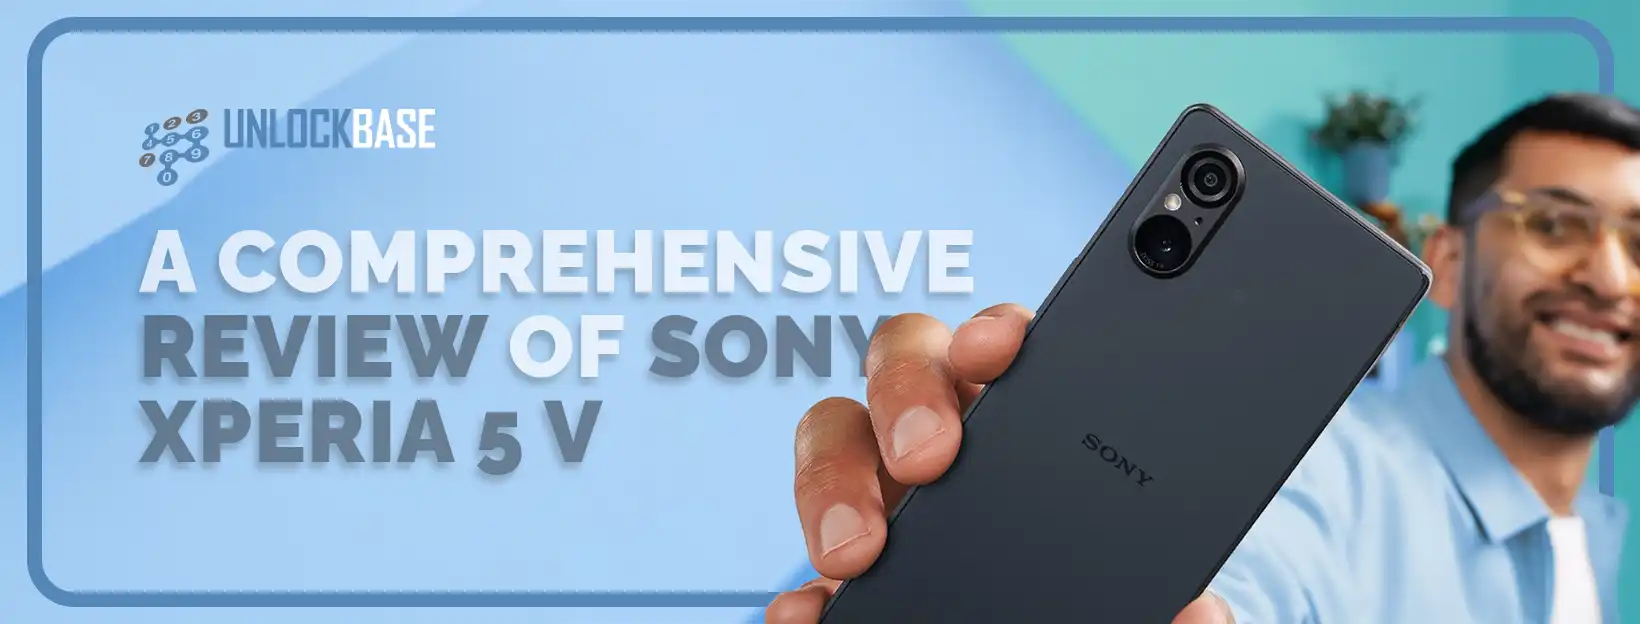 Sony's Xperia 5, Sony